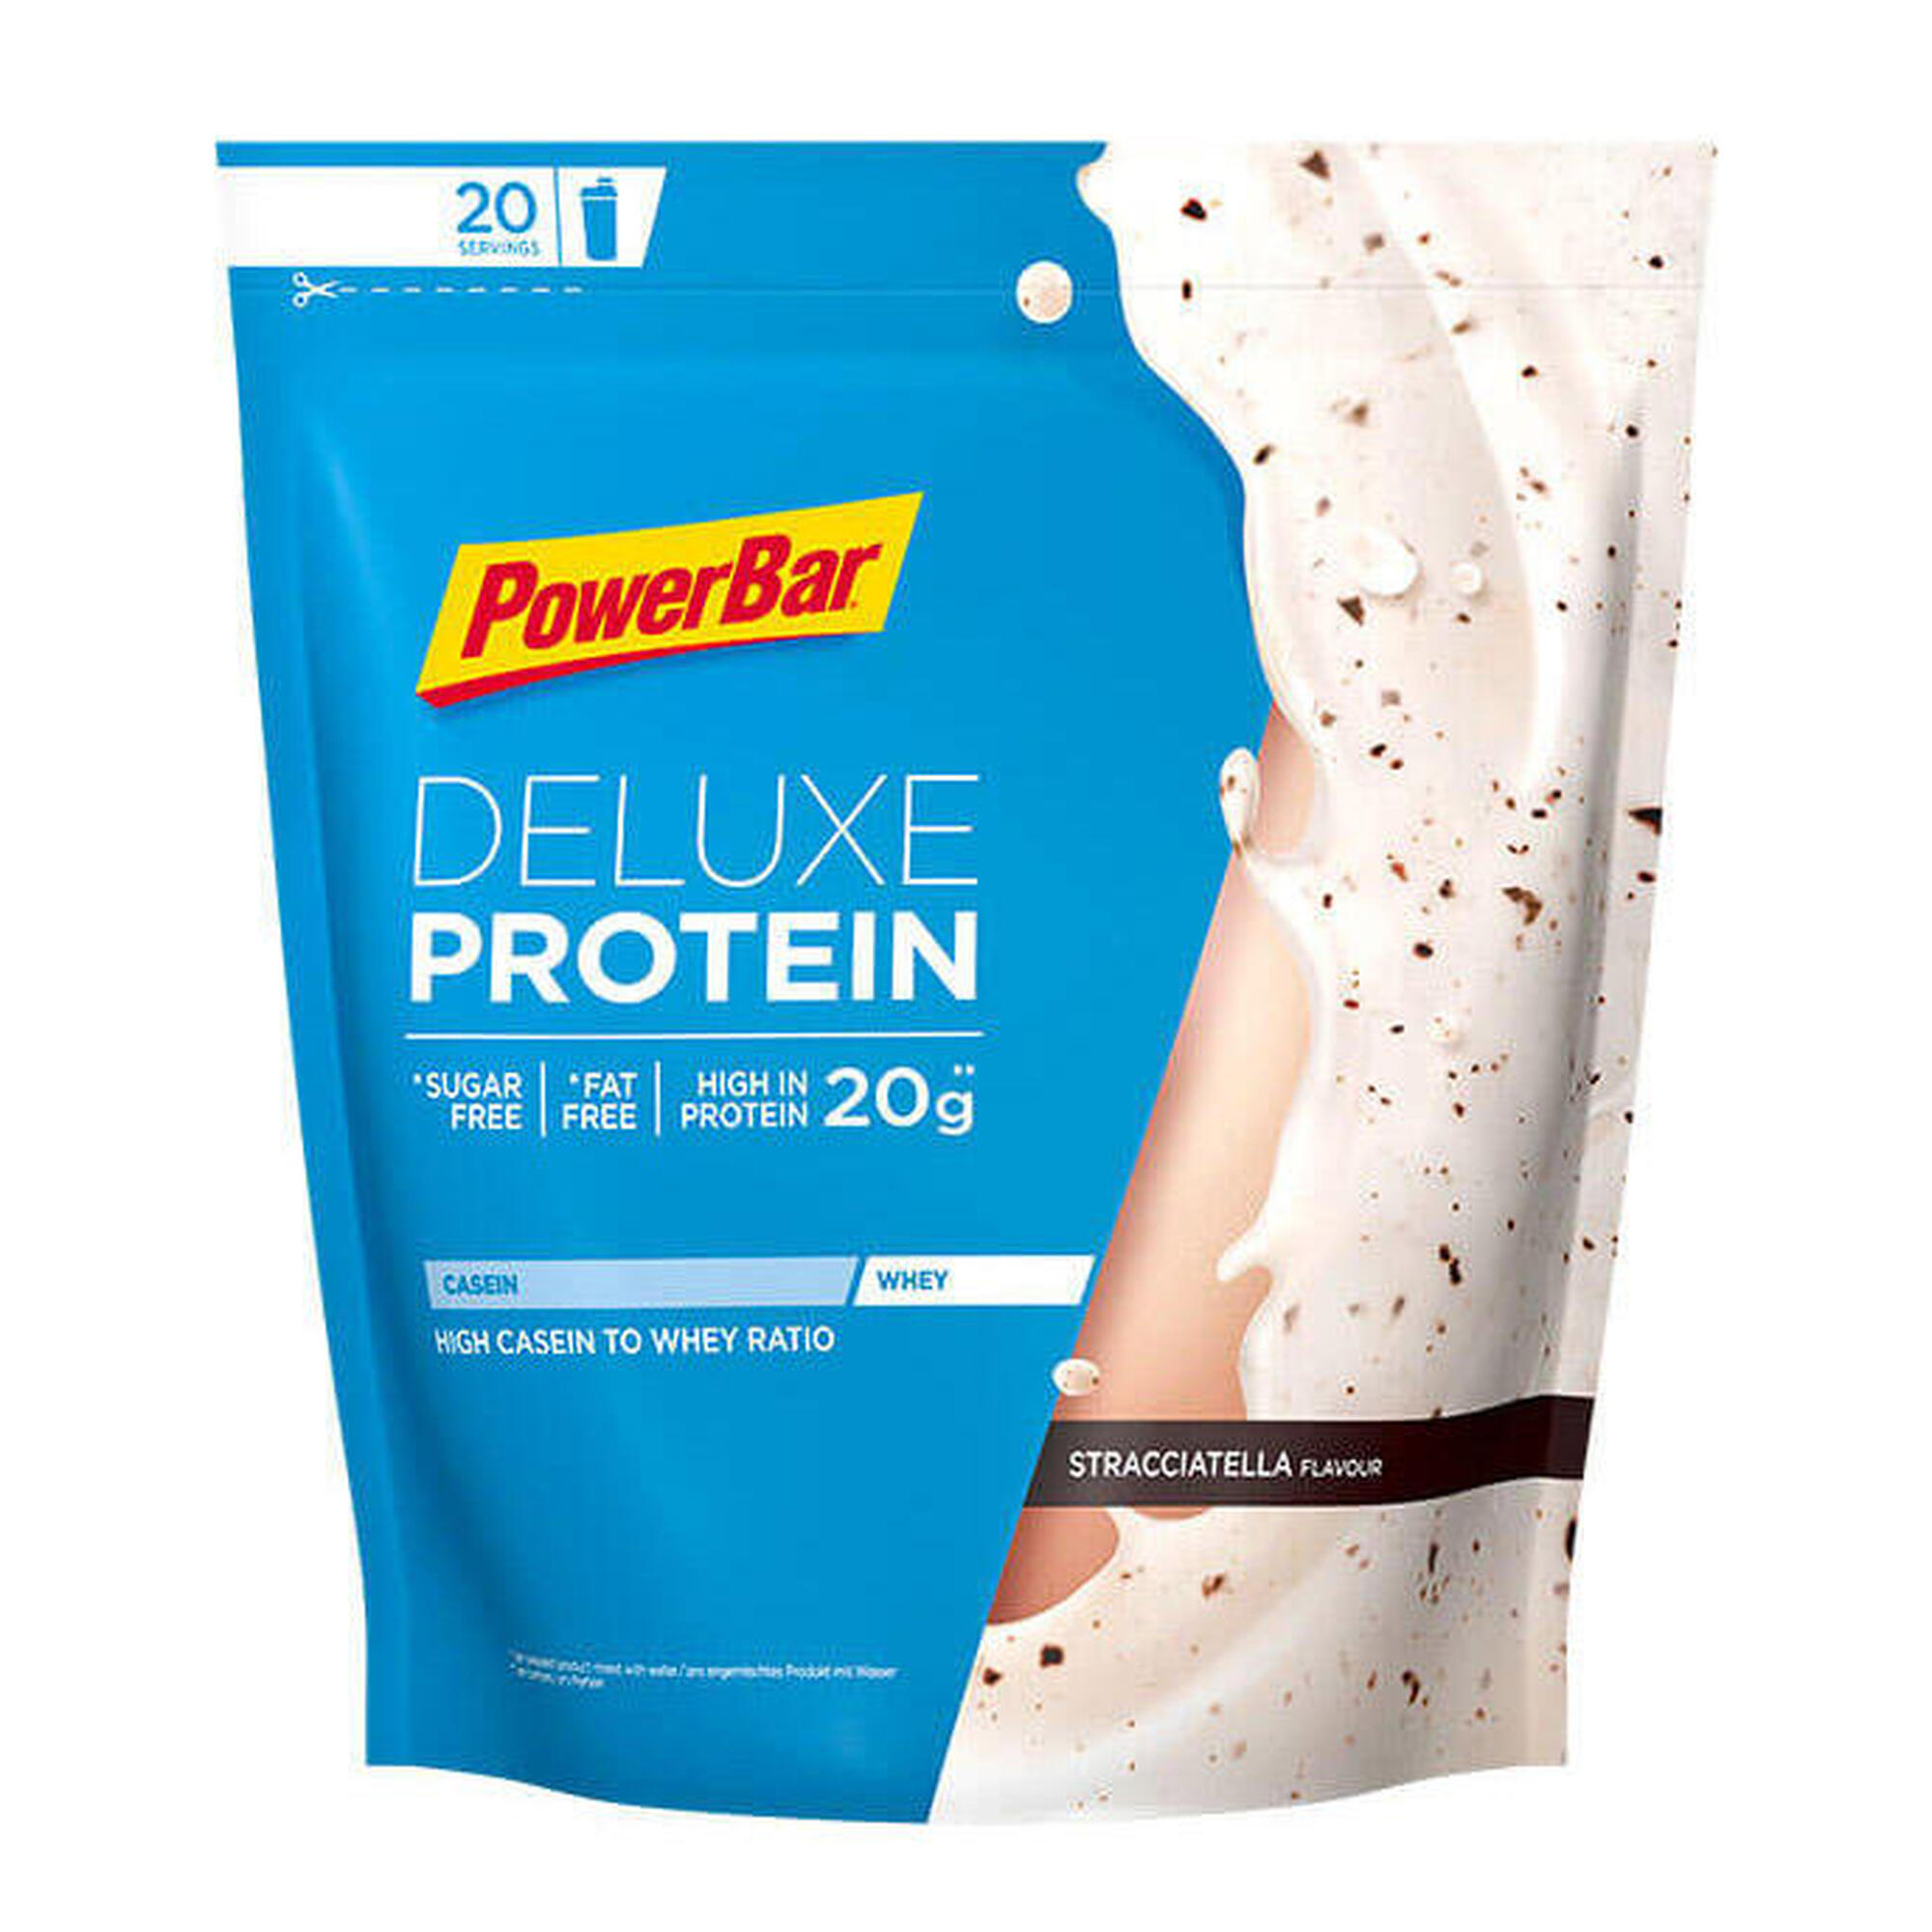 Polvere PowerBar ProteinPlus 80 % - Strawberry (500gr)